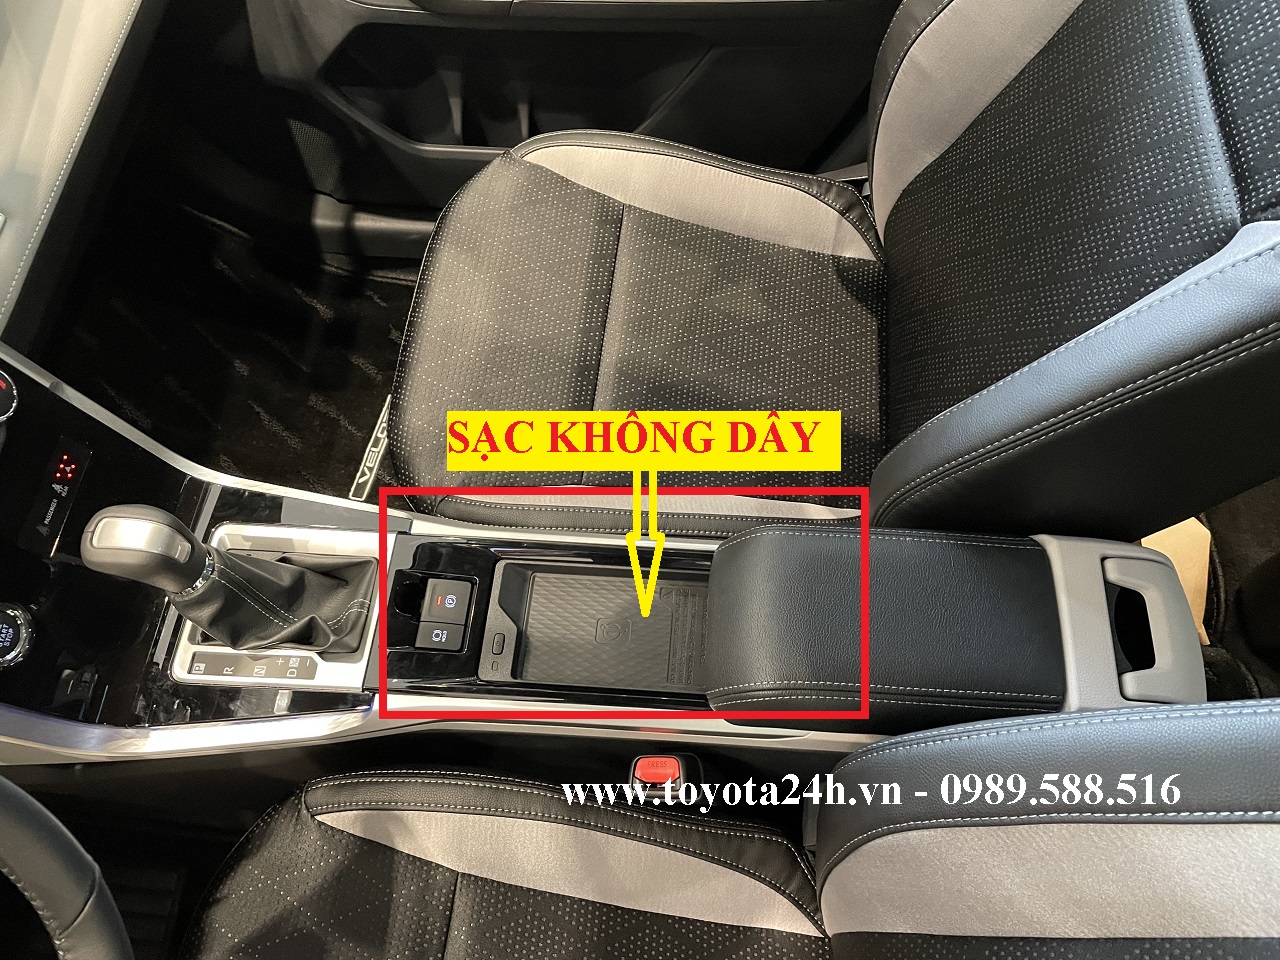 Toyota-Veloz-2022-sac-dien-thoai-khong-day